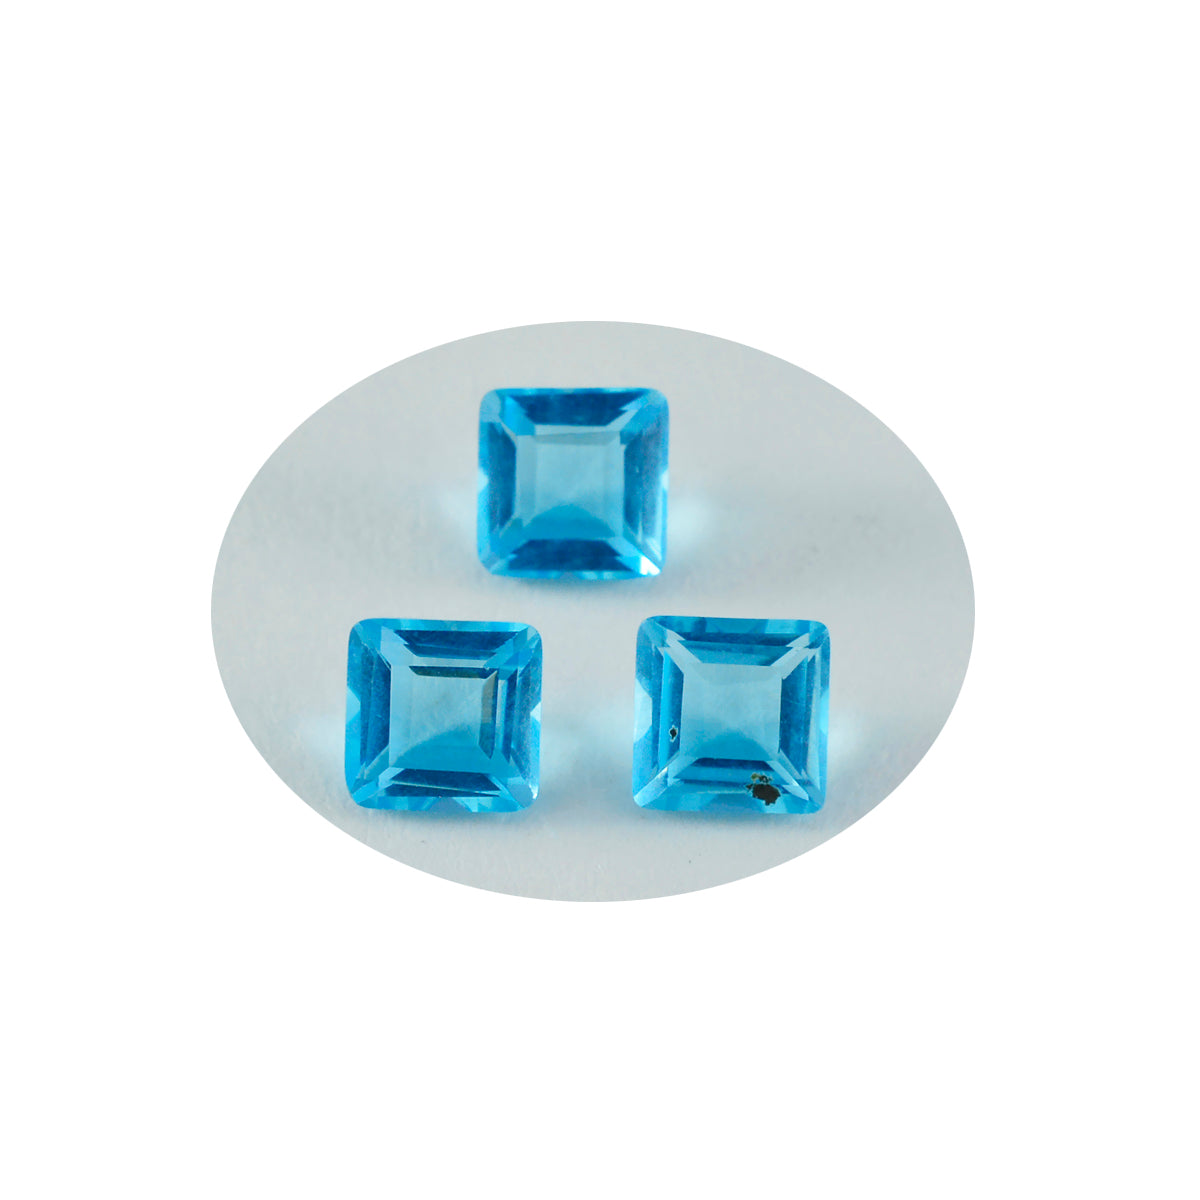 Riyogems 1PC Blue Topaz CZ Faceted 8x8 mm Square Shape handsome Quality Gemstone